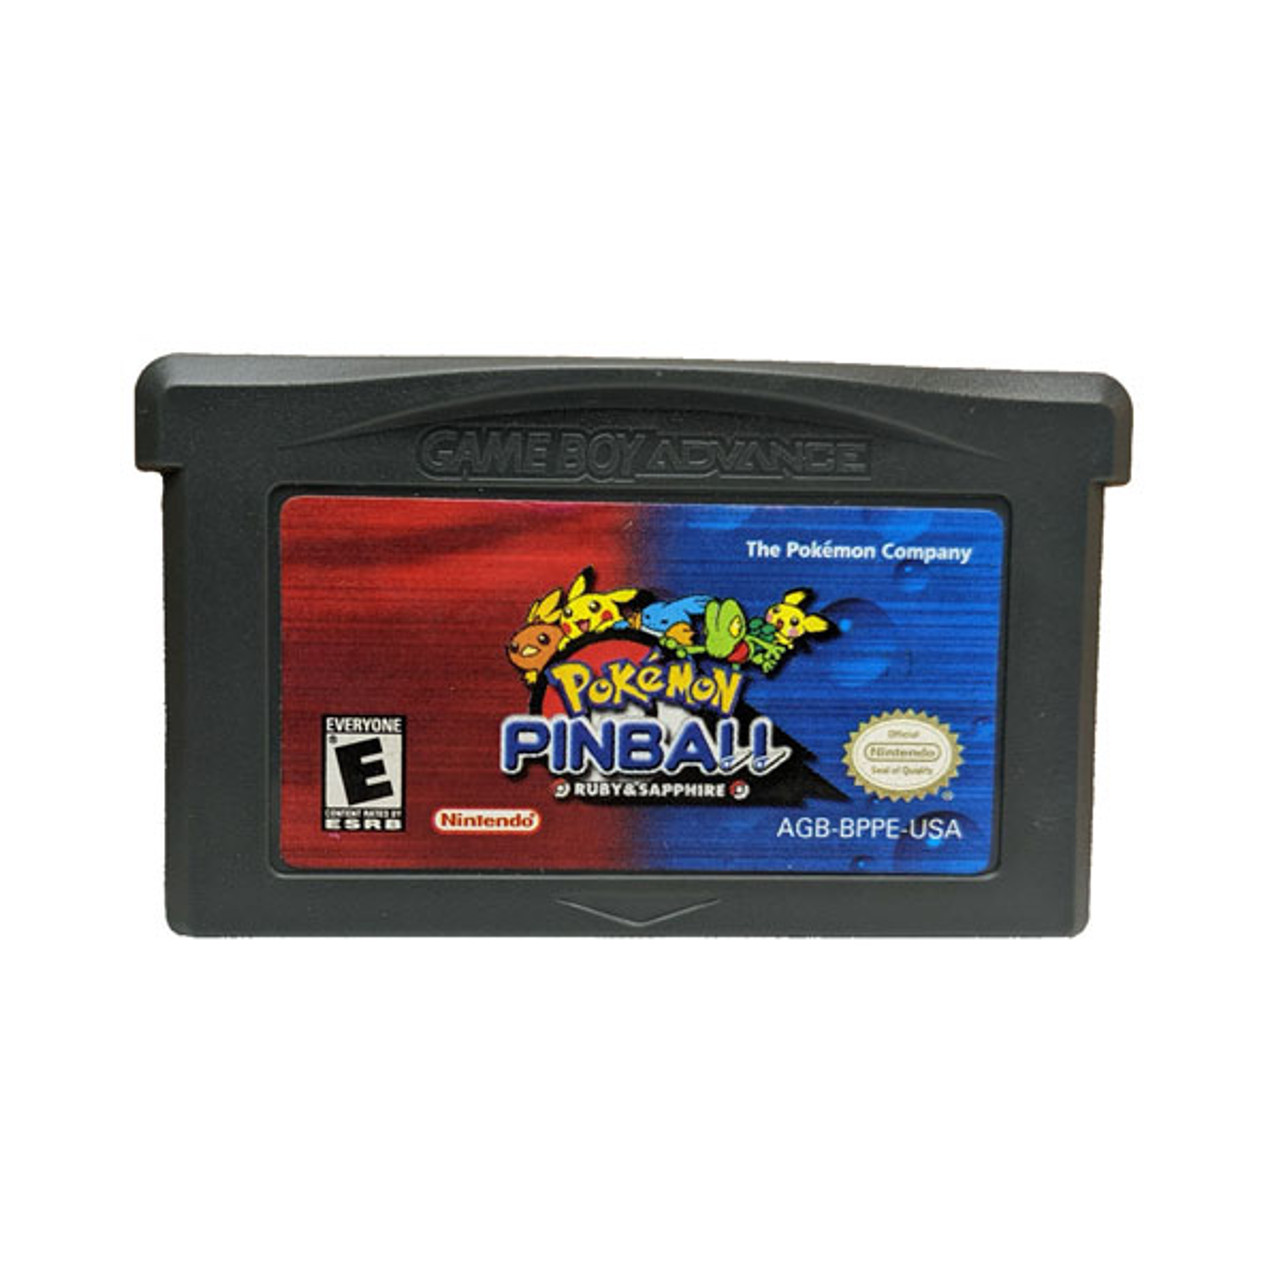 Pokemon Pinball GameBoy Advance For Sale |